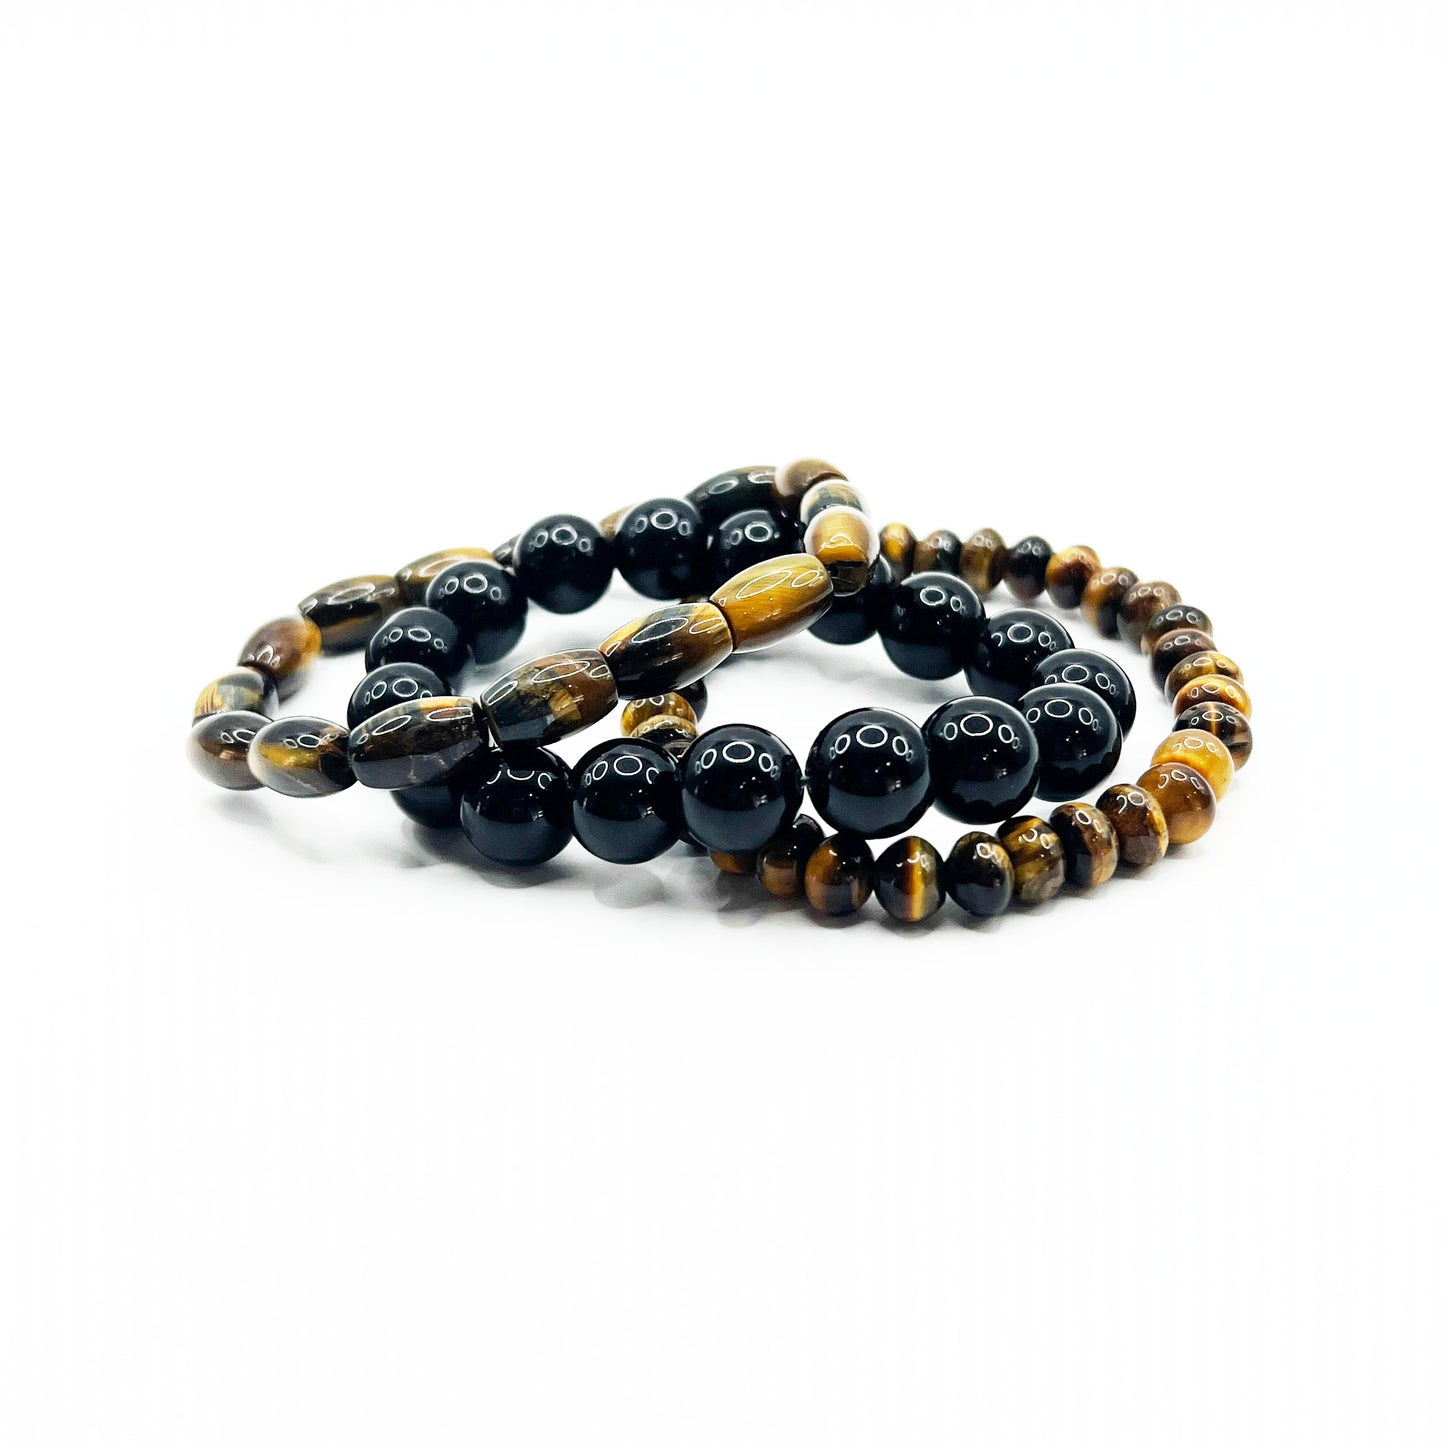 Black Onyx Beads Bracelet